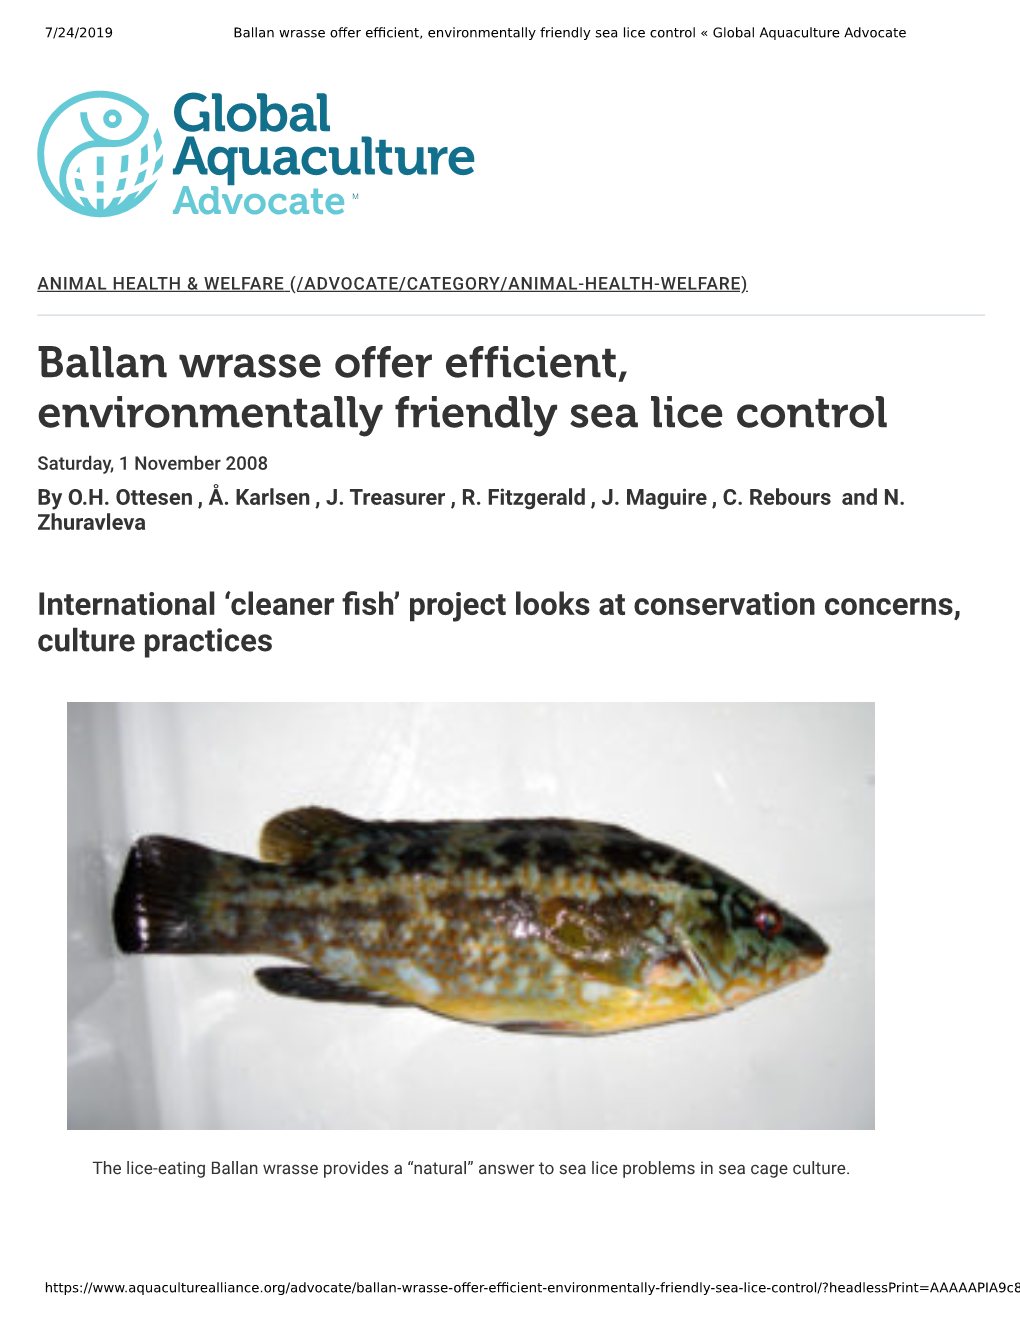 Ballan Wrasse Offer Efficient, Environmentally Friendly Sea Lice Control Saturday, 1 November 2008 by O.H